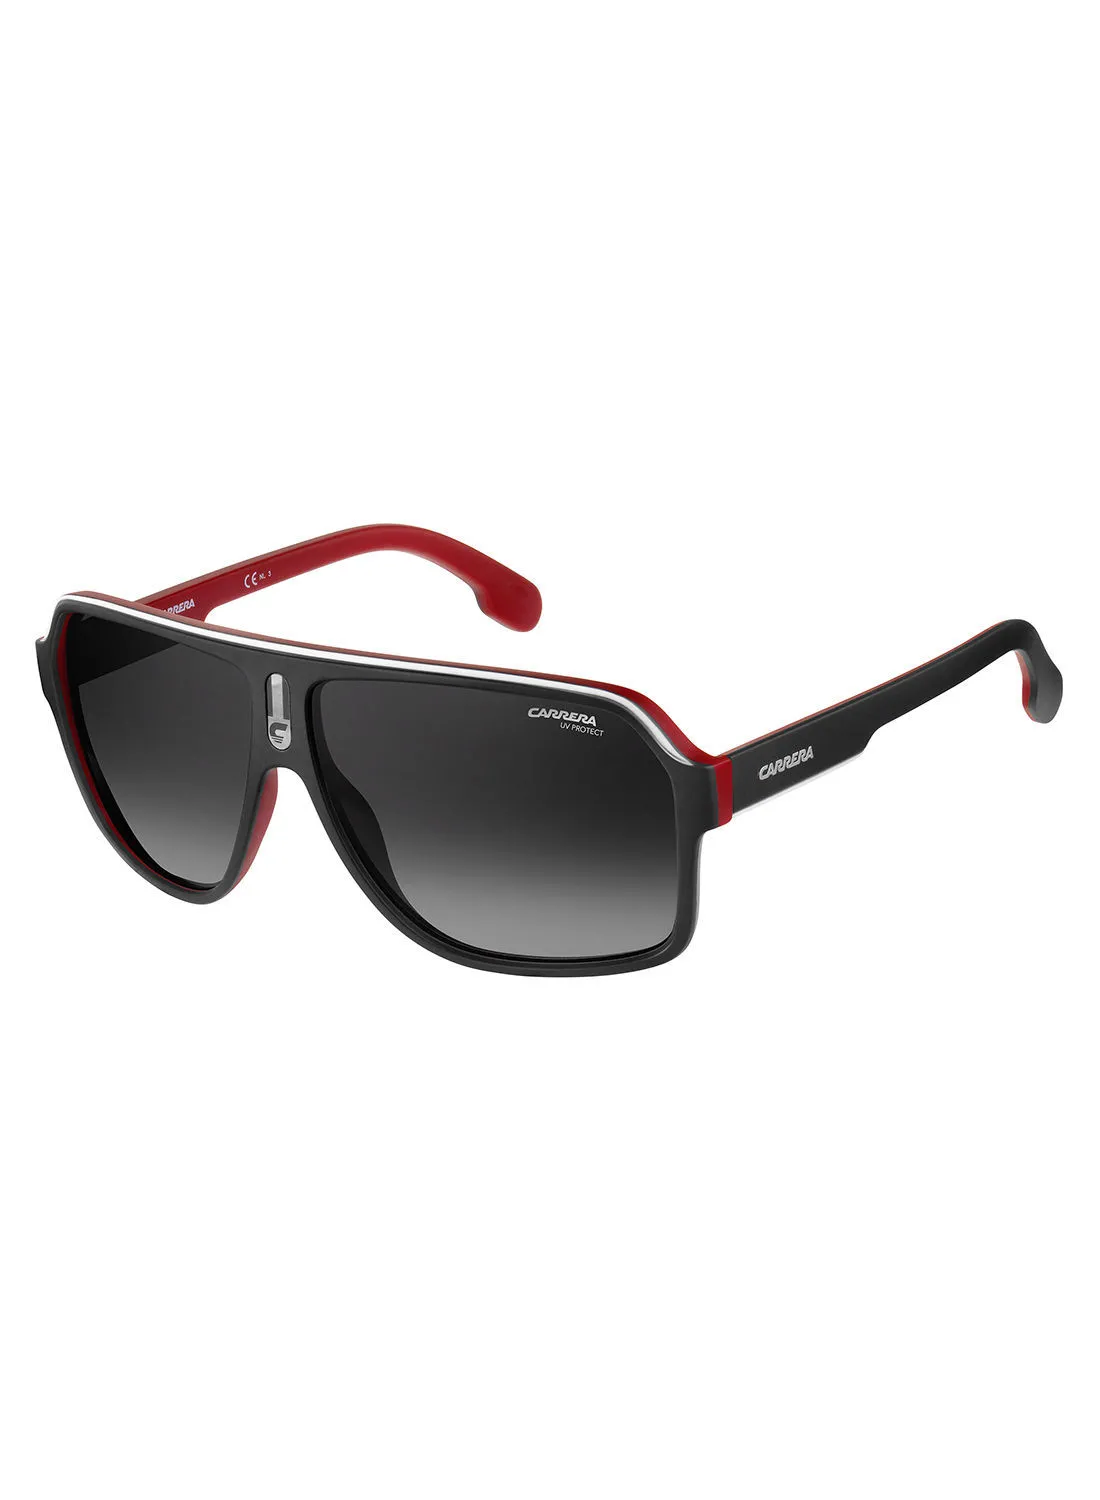 CARRERA UV Protection Rectangular Eyewear Sunglasses CARRERA 1001/S  MT BLK RD 62